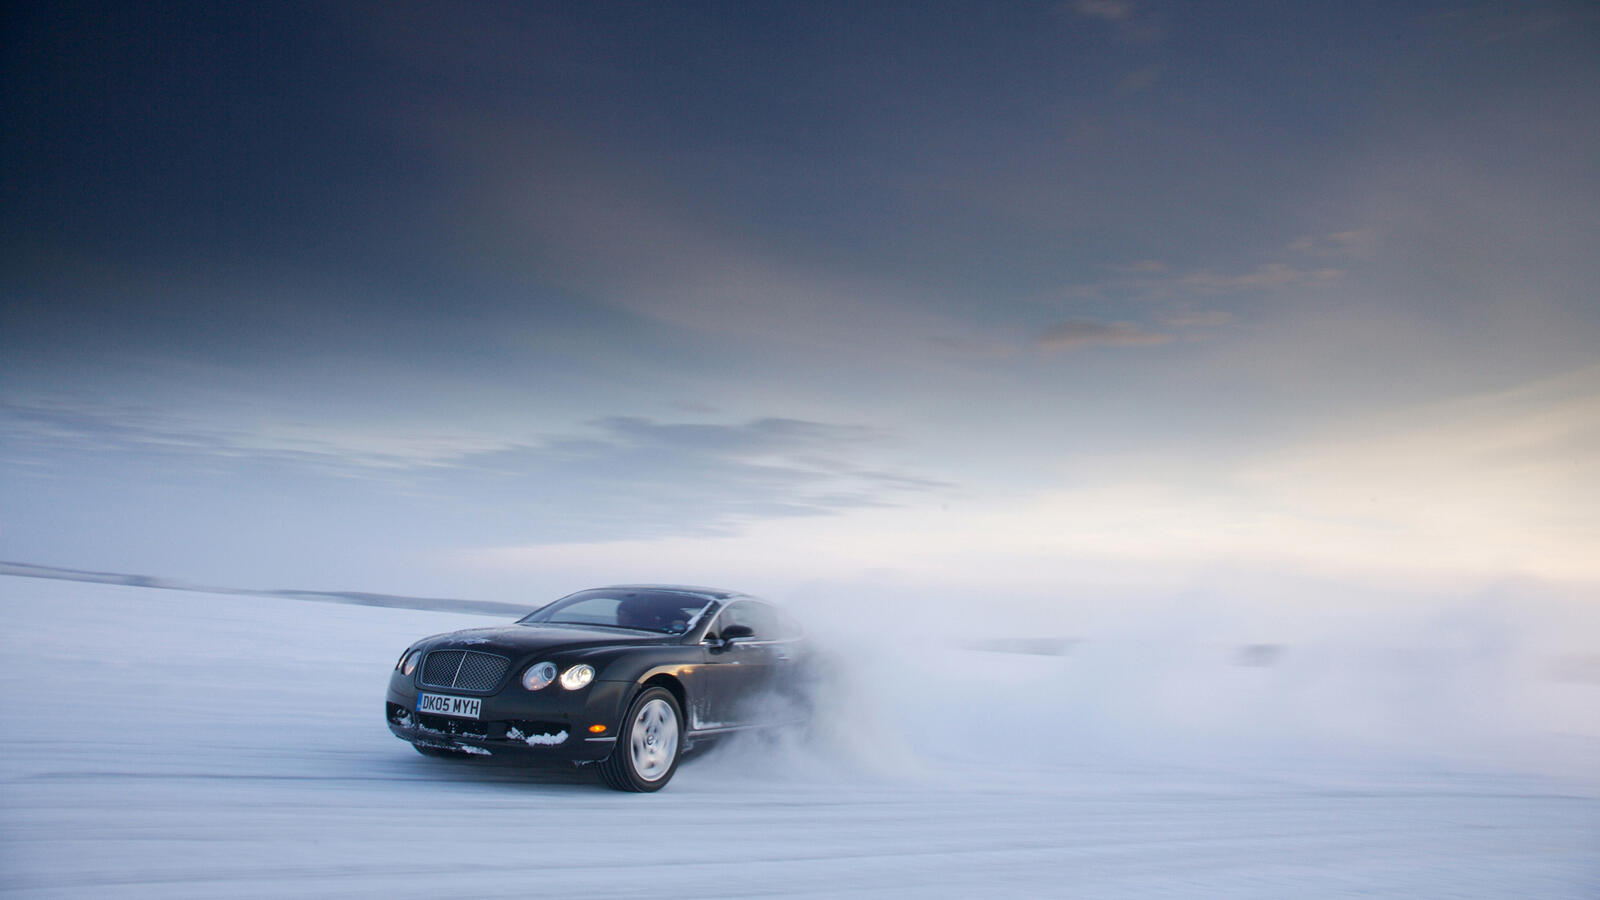 Free photo A black Bentley drifting across a snowy field.